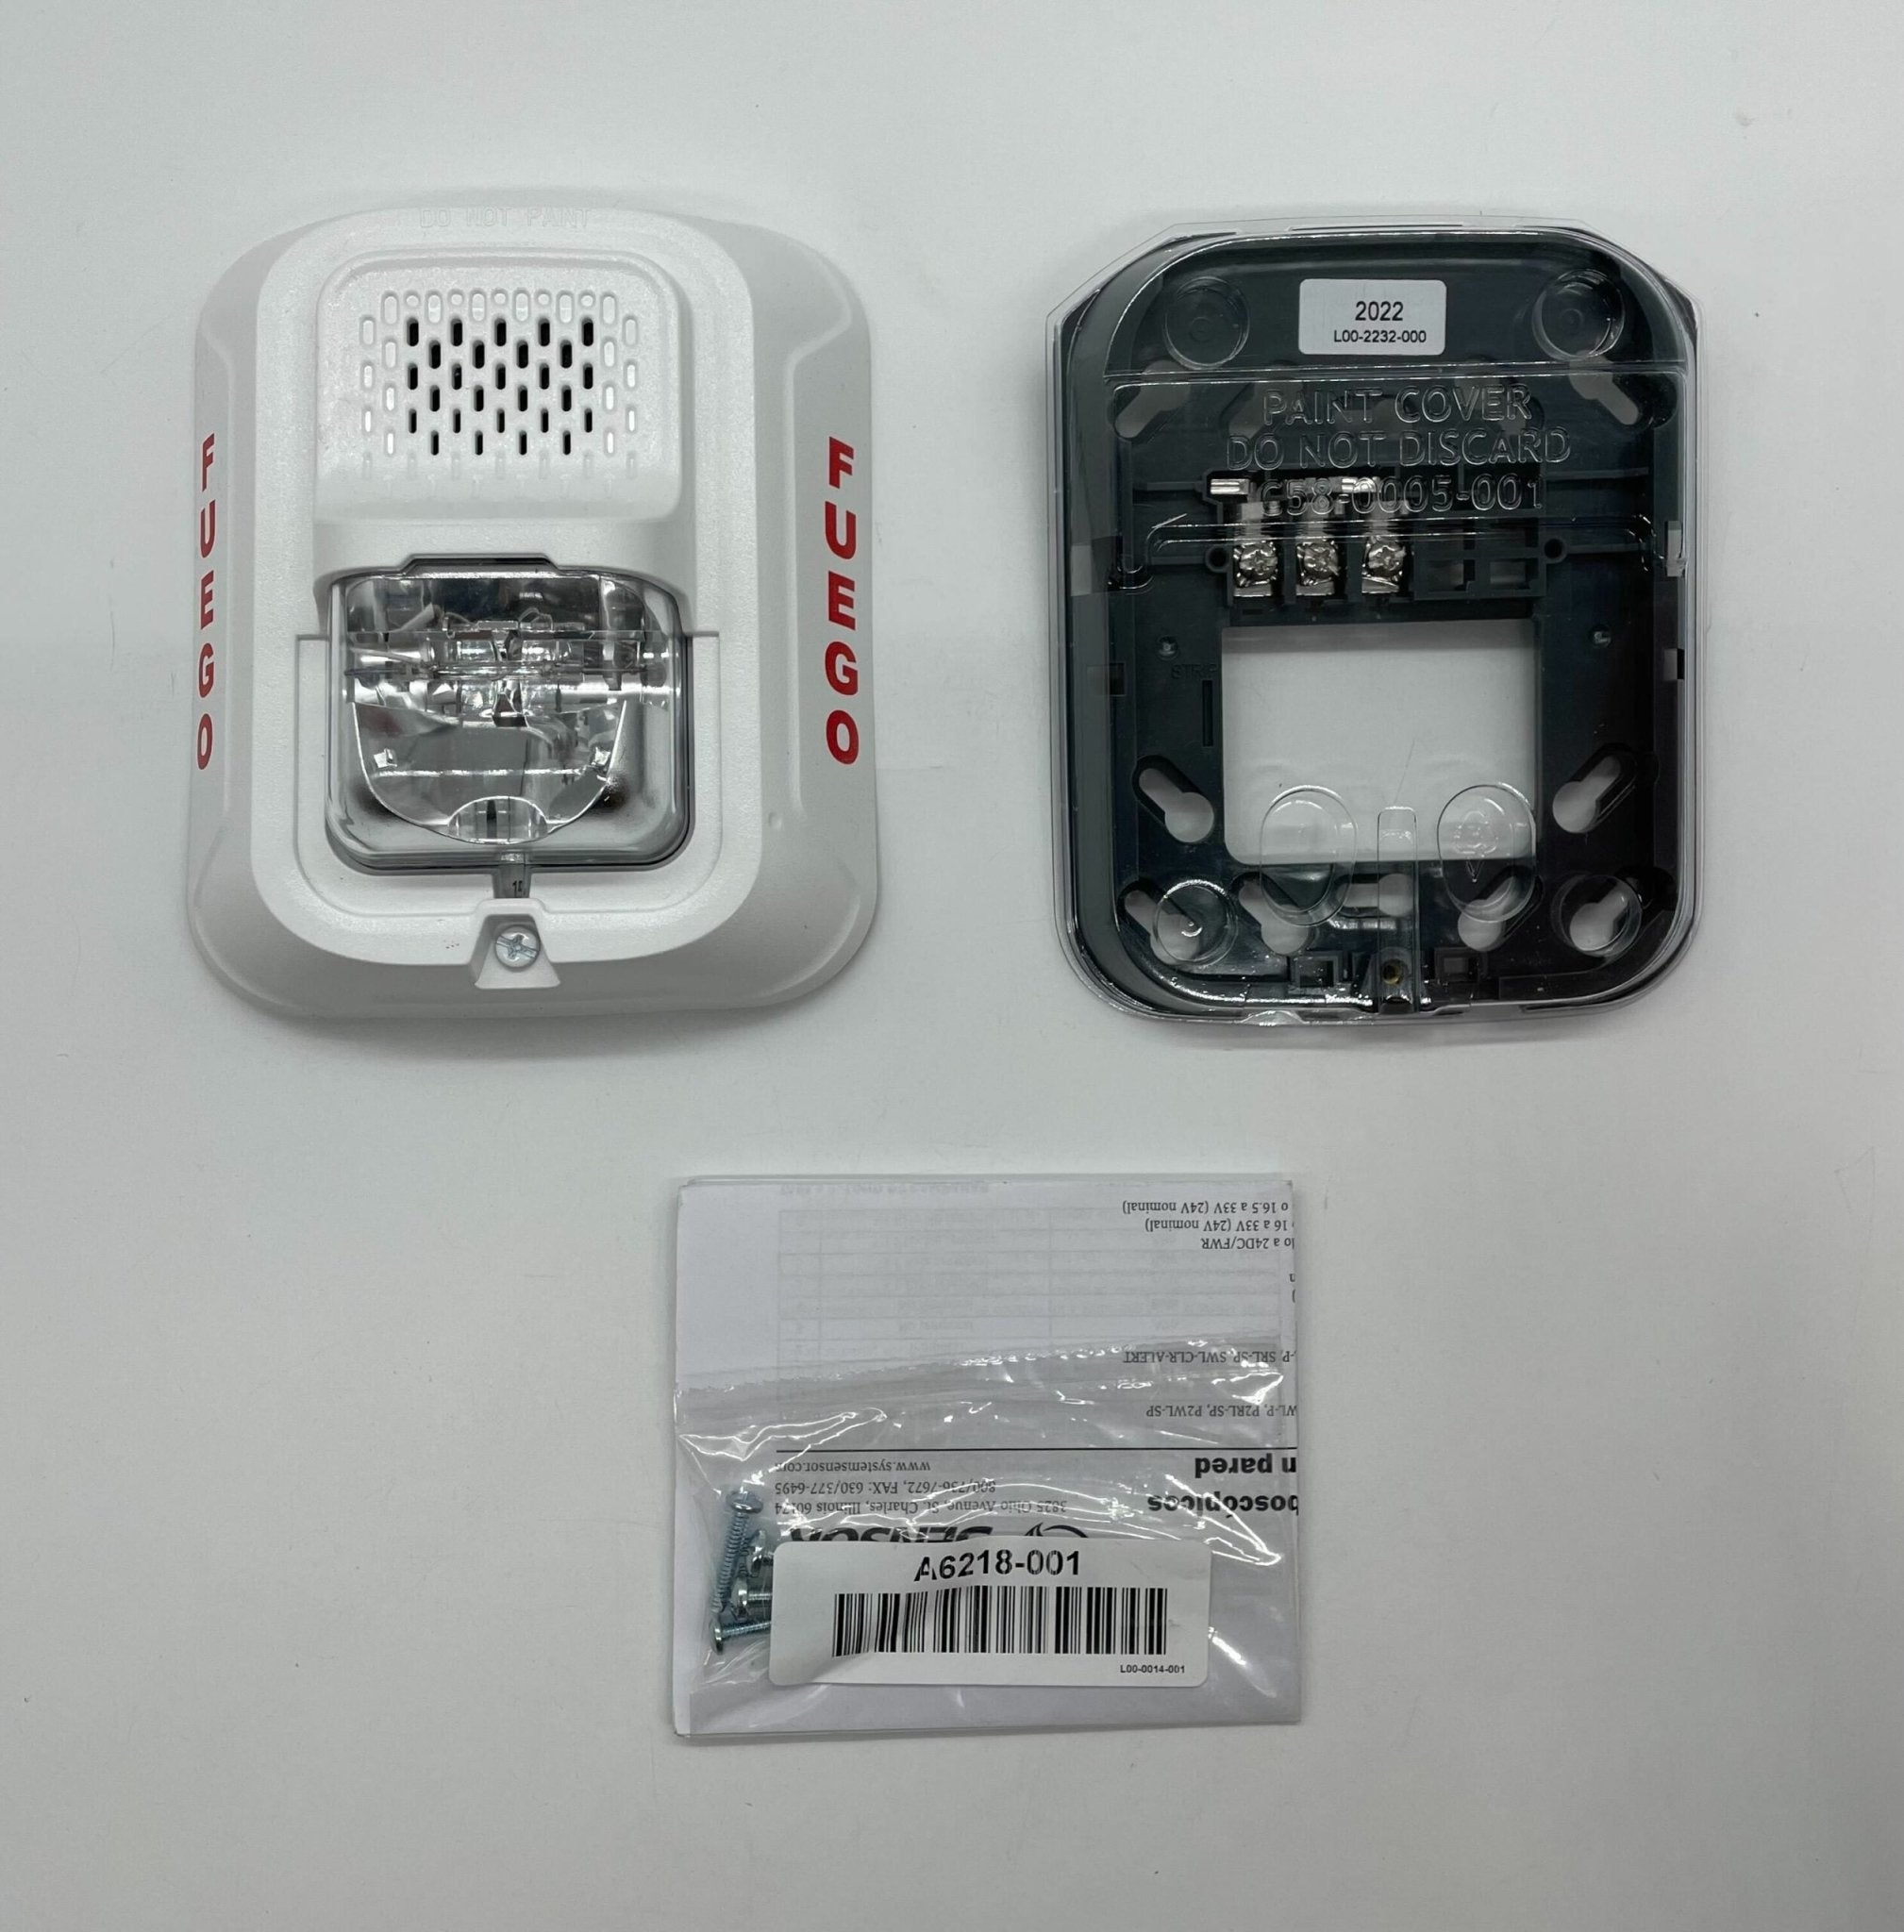 System Sensor P2WL-SP Horn/Strobe, Fuego (Spanish) - The Fire Alarm Supplier